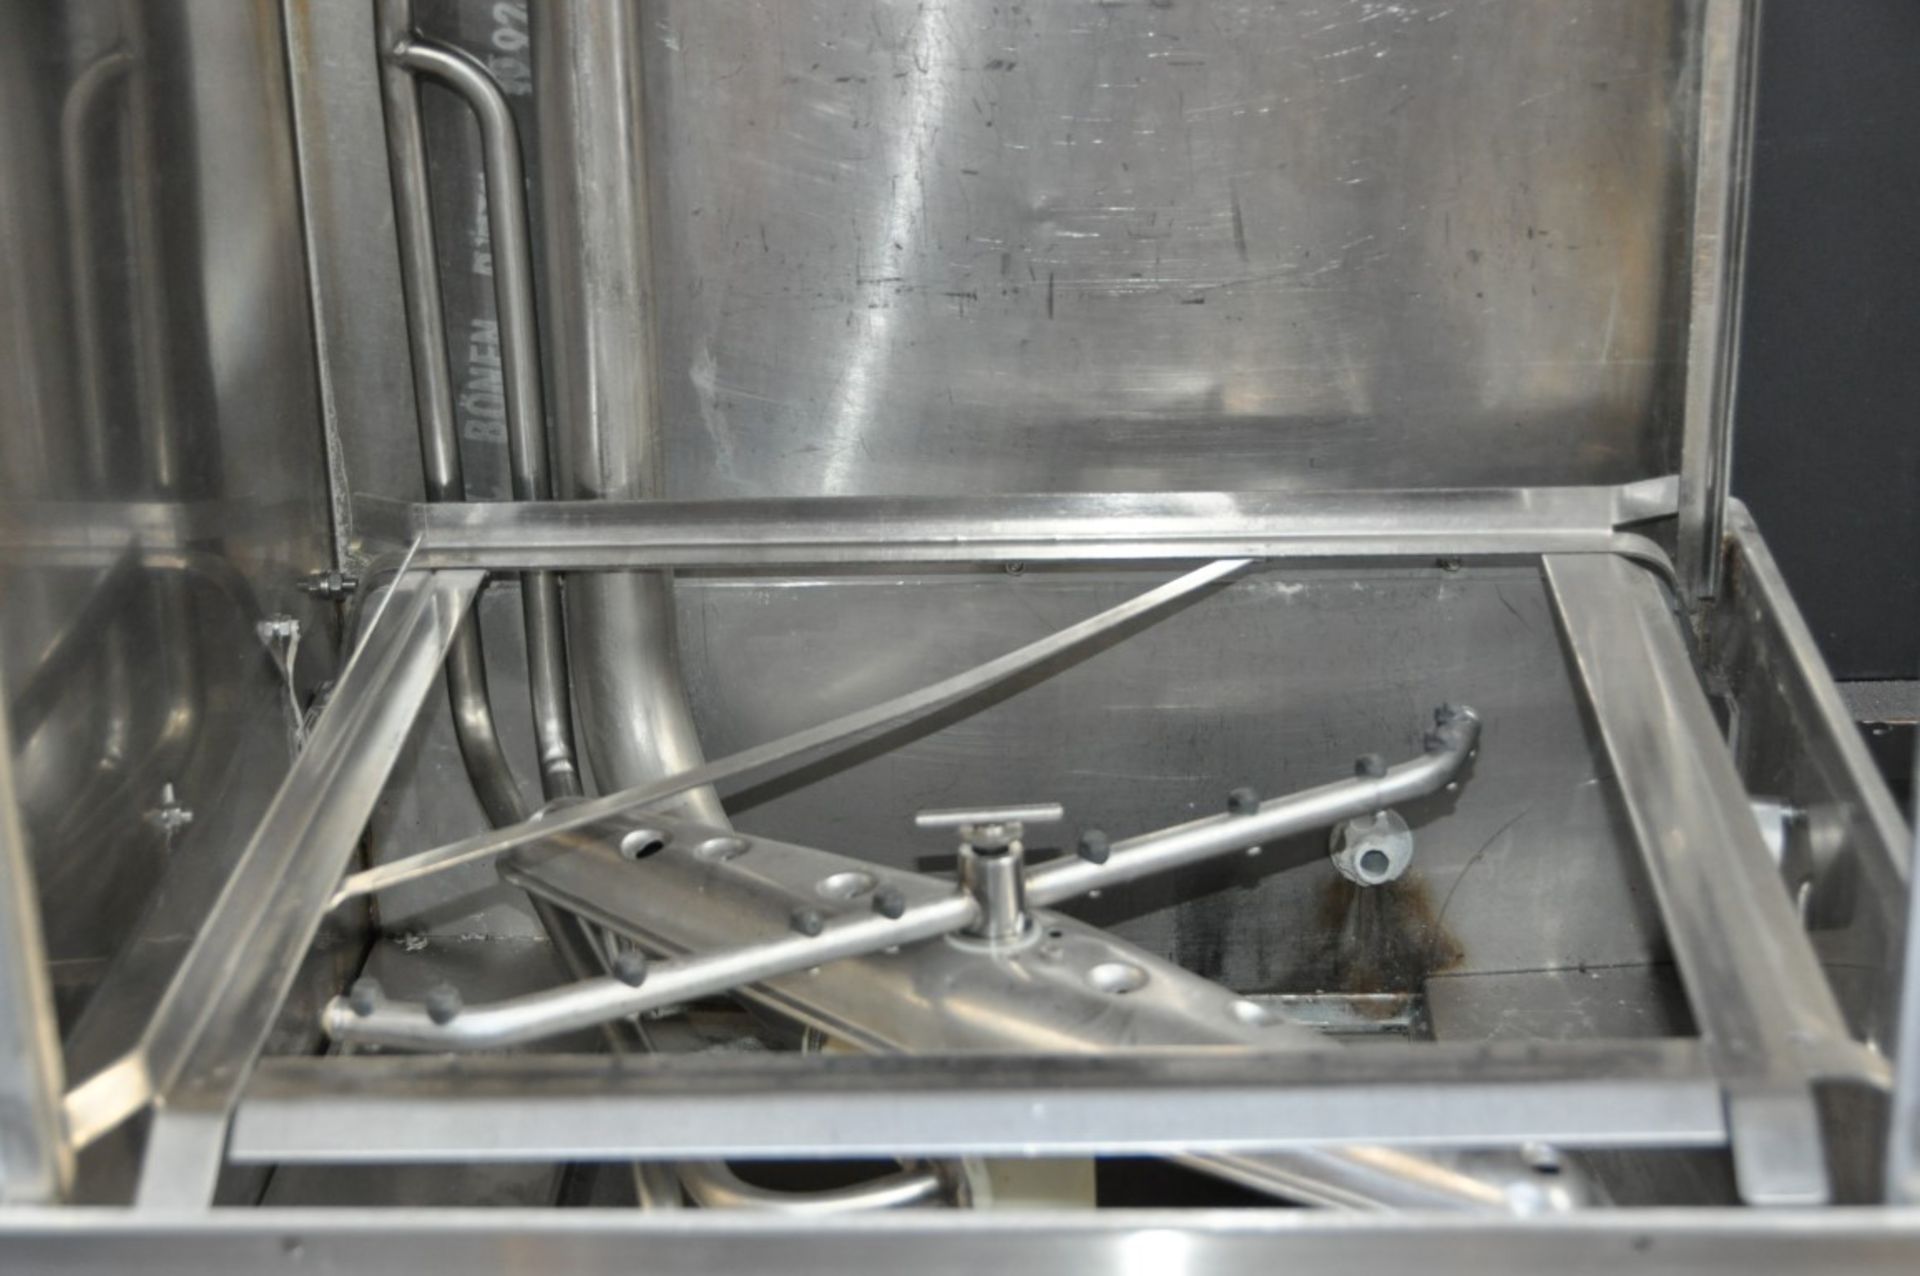 1 x Hobart Amizec Dishwasher / Glasswasher - Ideal For Cafes, Bars, Restaurants - Disconnected, - Image 6 of 9